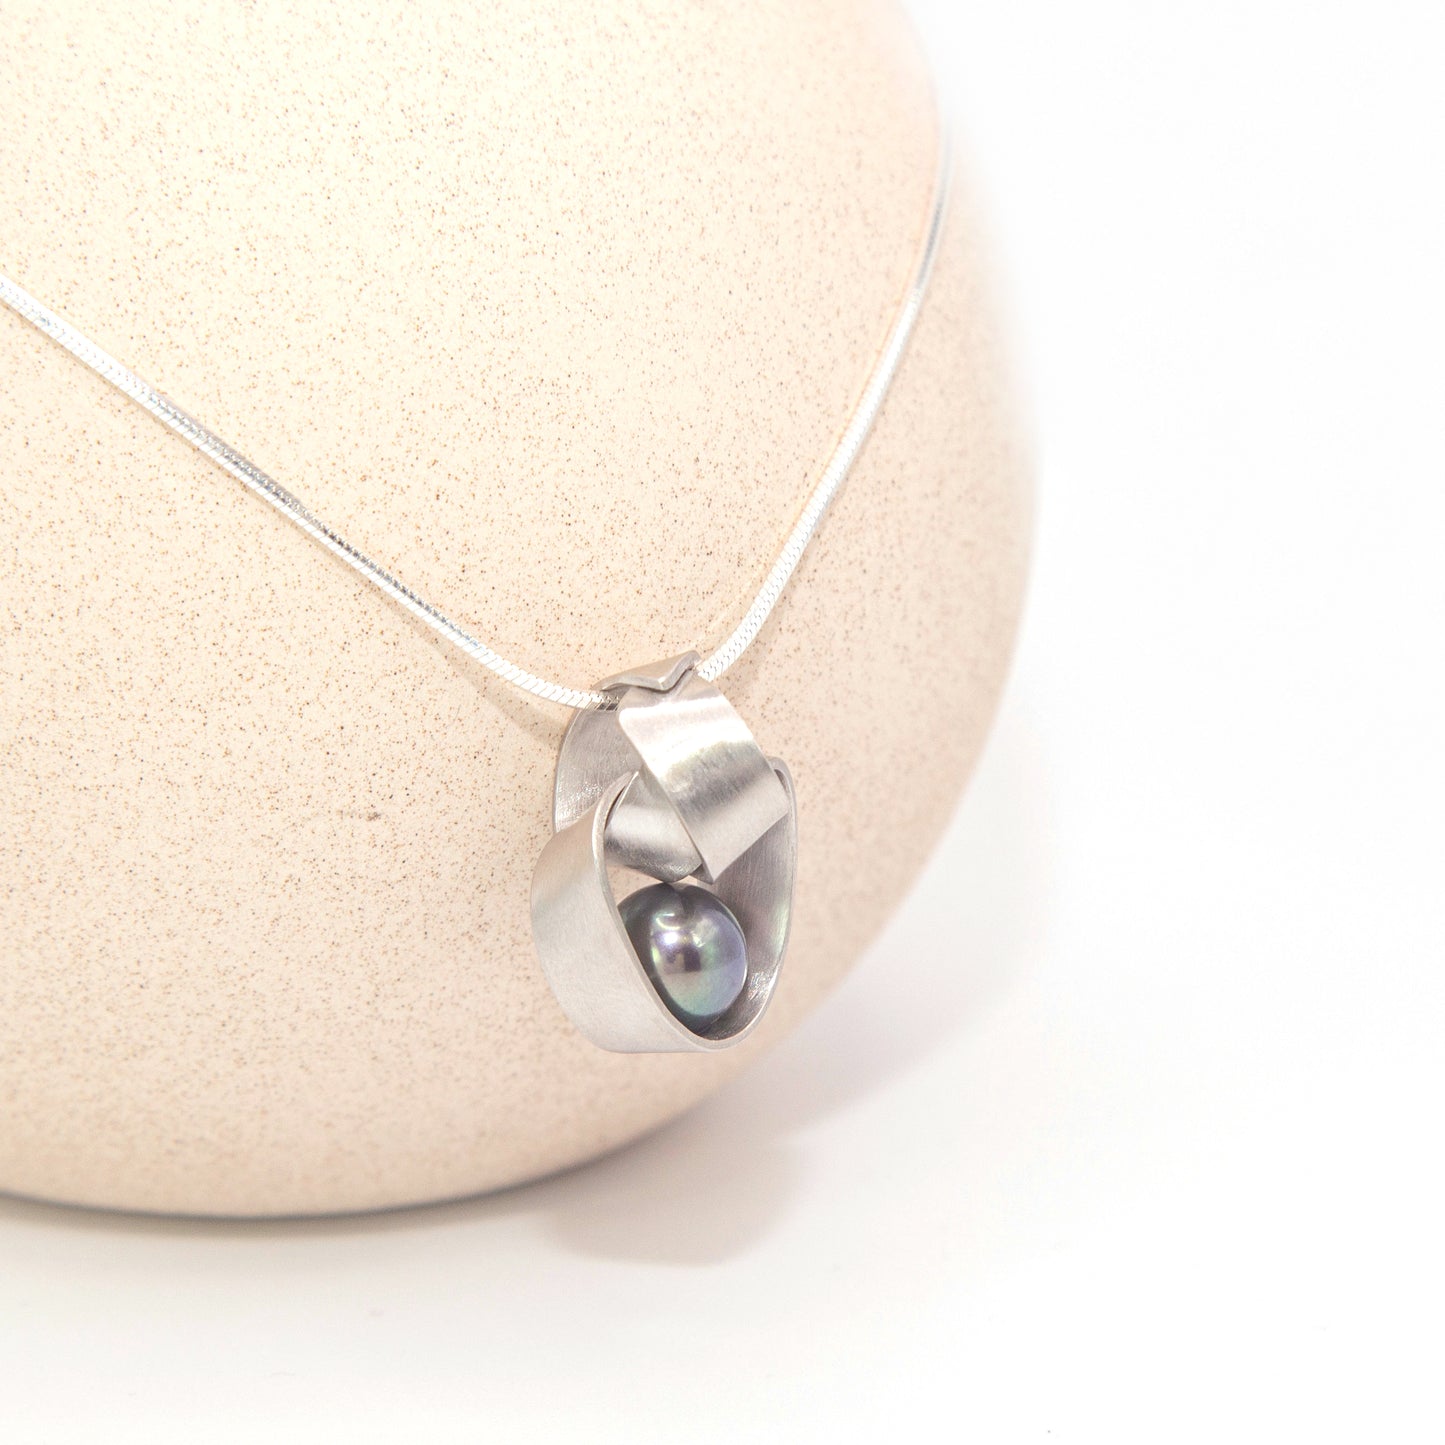 pearl necklace, Black pearl pendant, silver pendant, contemporary jewelry, art jewellery, knot pendant, 